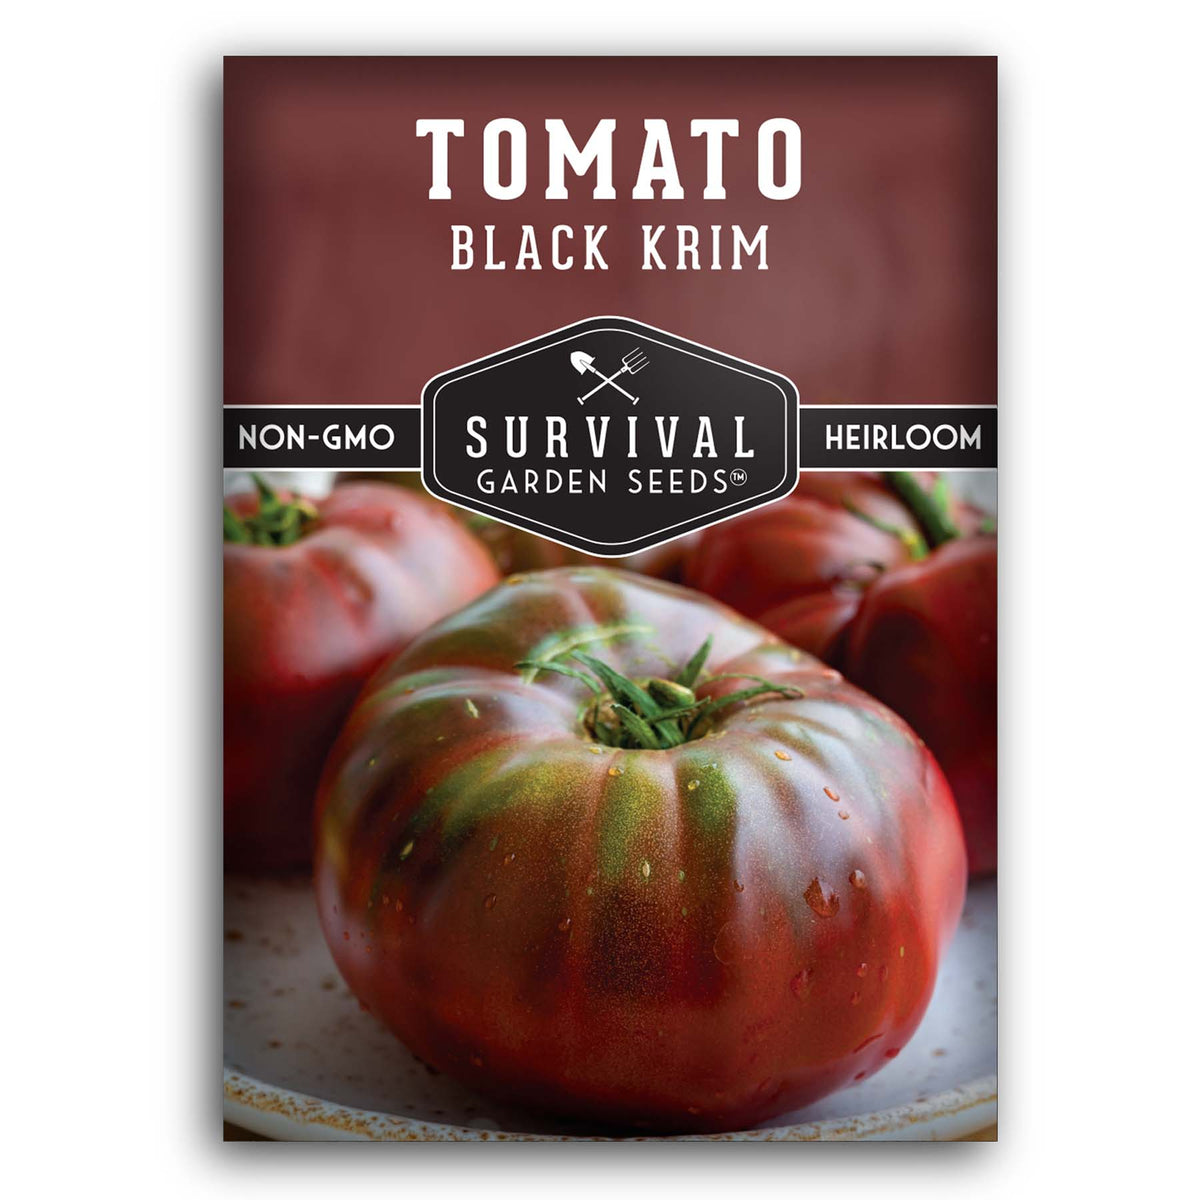 Black Krim Tomato heirloom seeds for planting